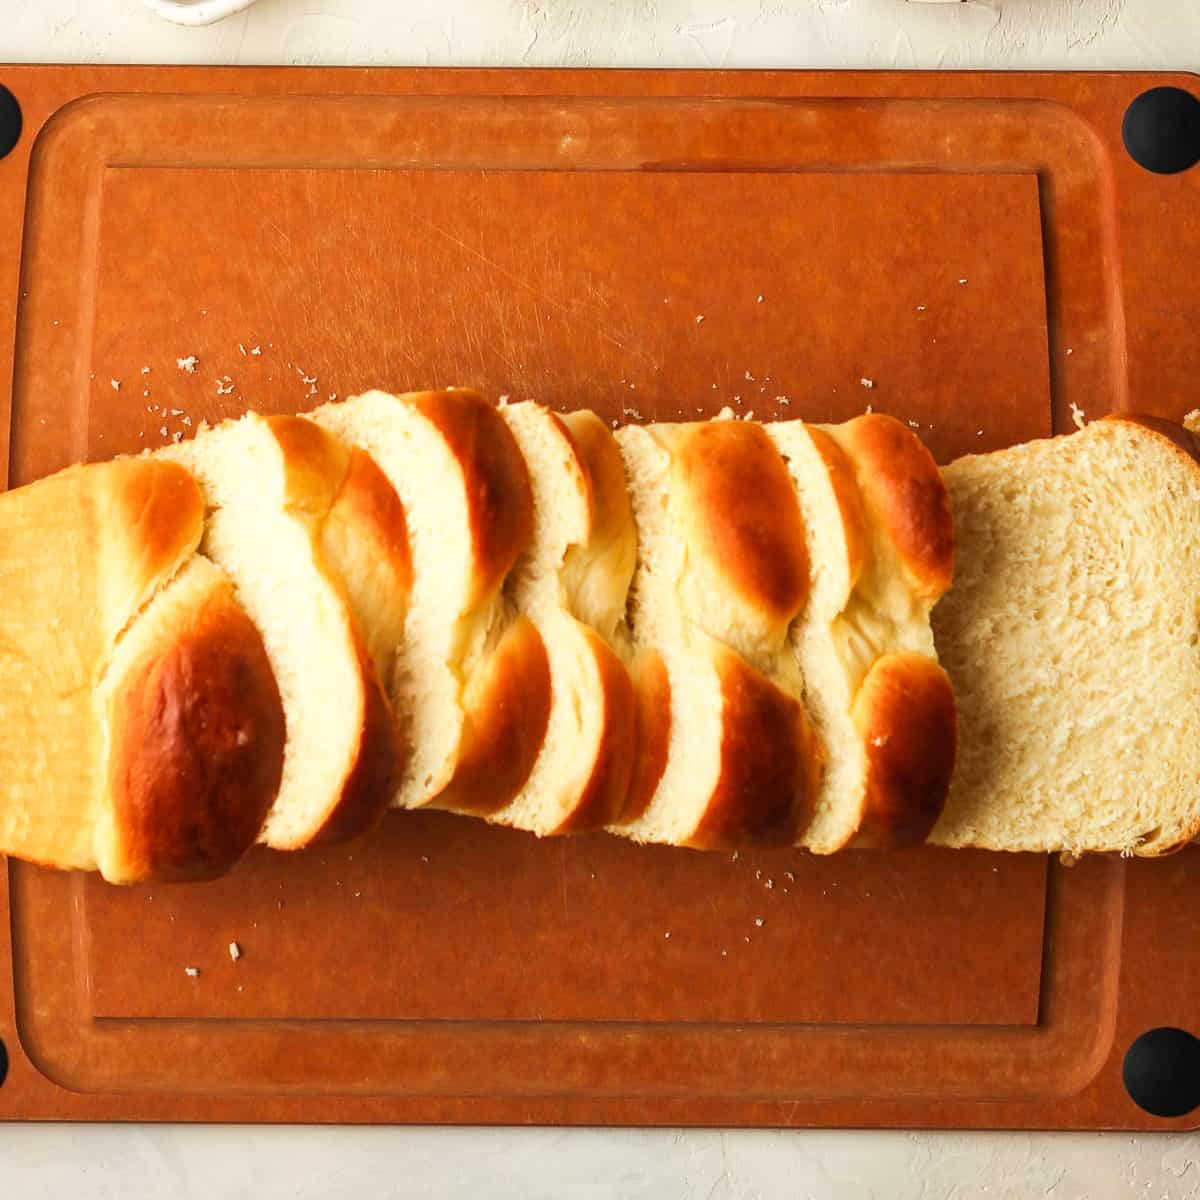 Sliced brioche bread for French toast.